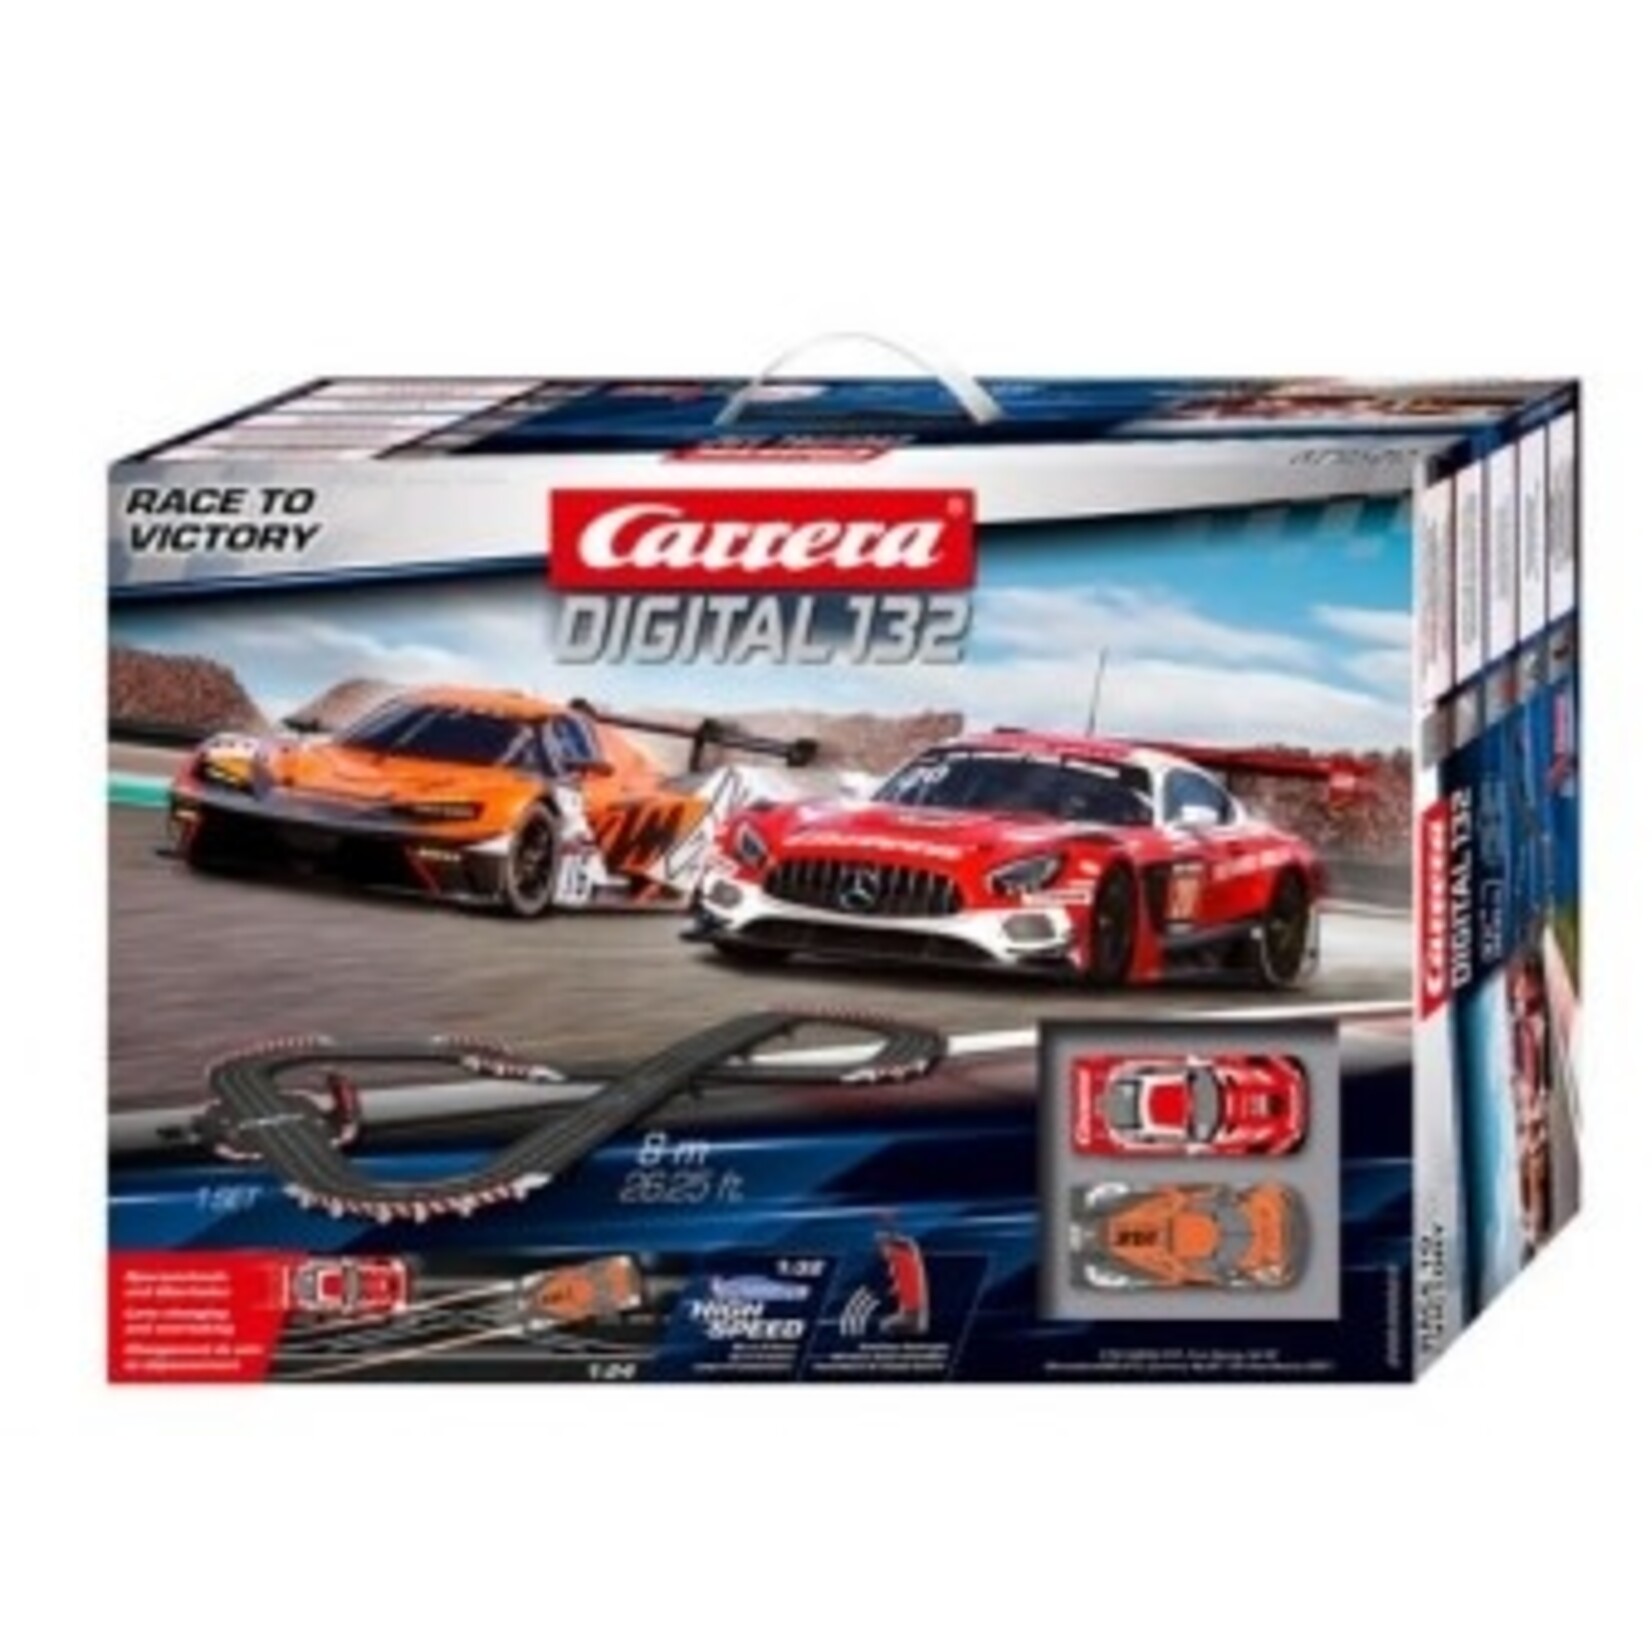 Carrera Race to Victory Set, Digital 132 w/Lights and Wireless